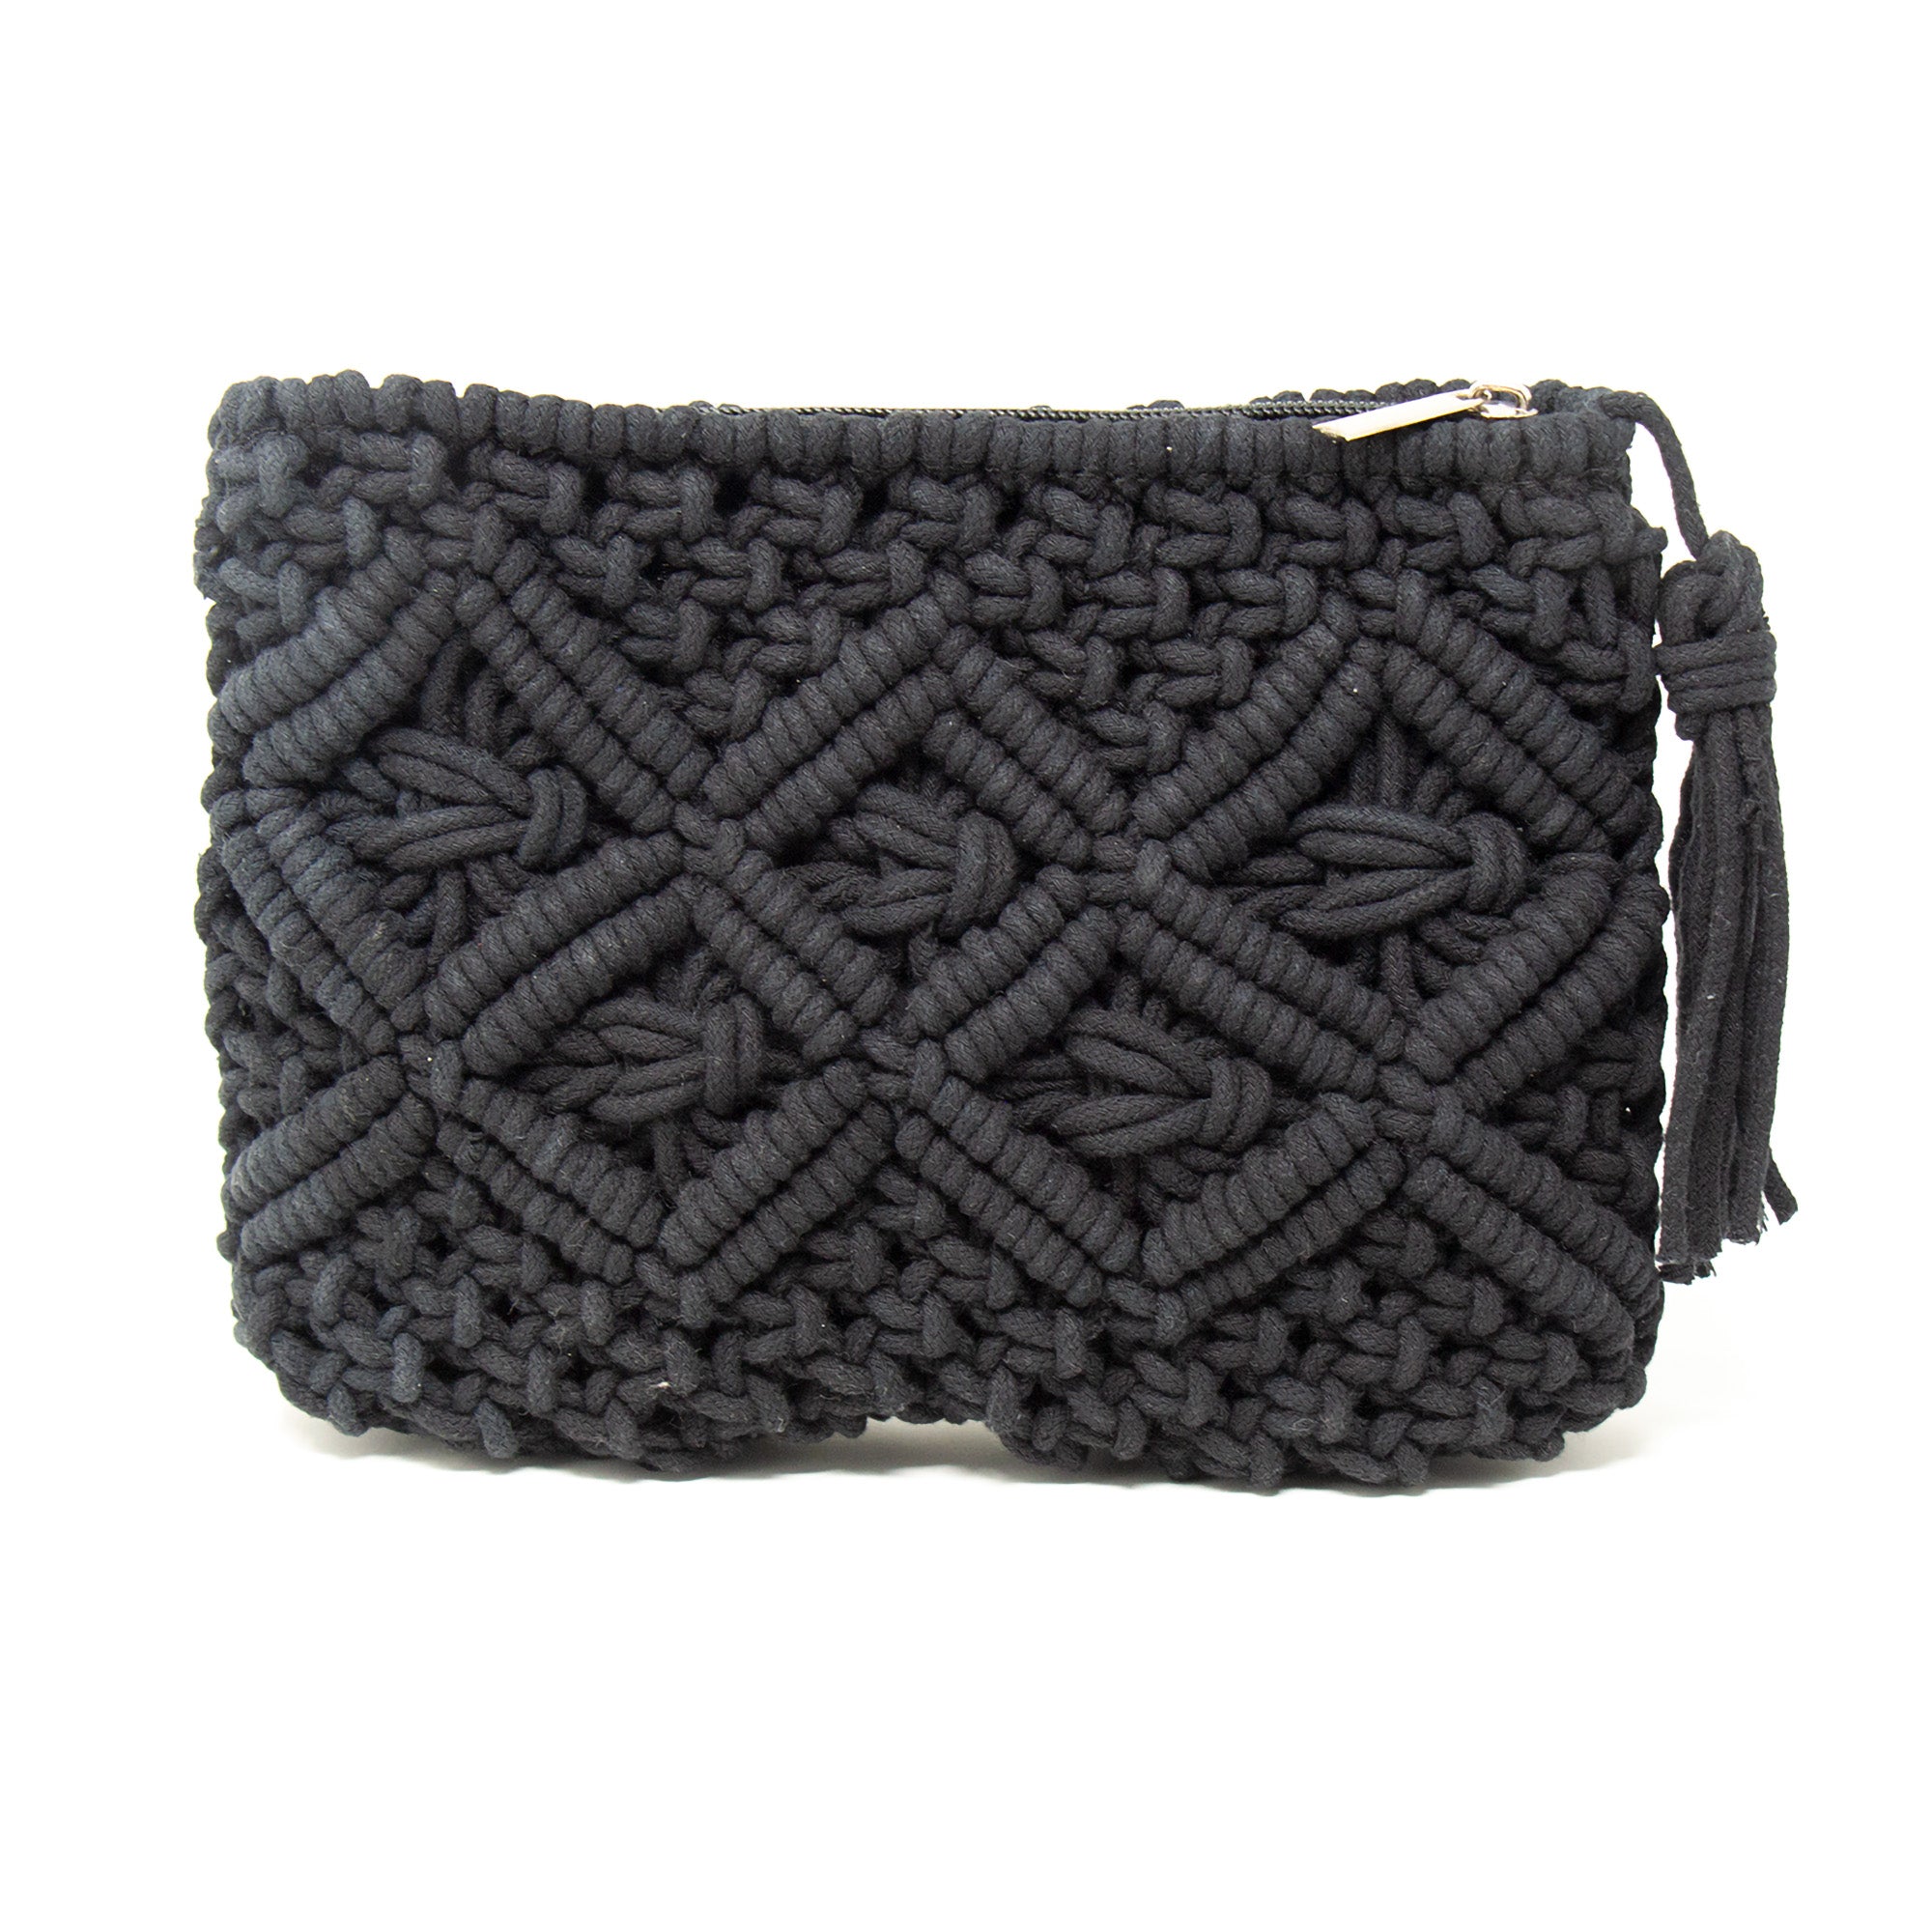 Maatir Black Hand Knotted Macrame Pouch with Shoulder Strap | Women/Girl  Handmade Cotton Boho Crochet Beaded | Medium Cream Macrame Bag |